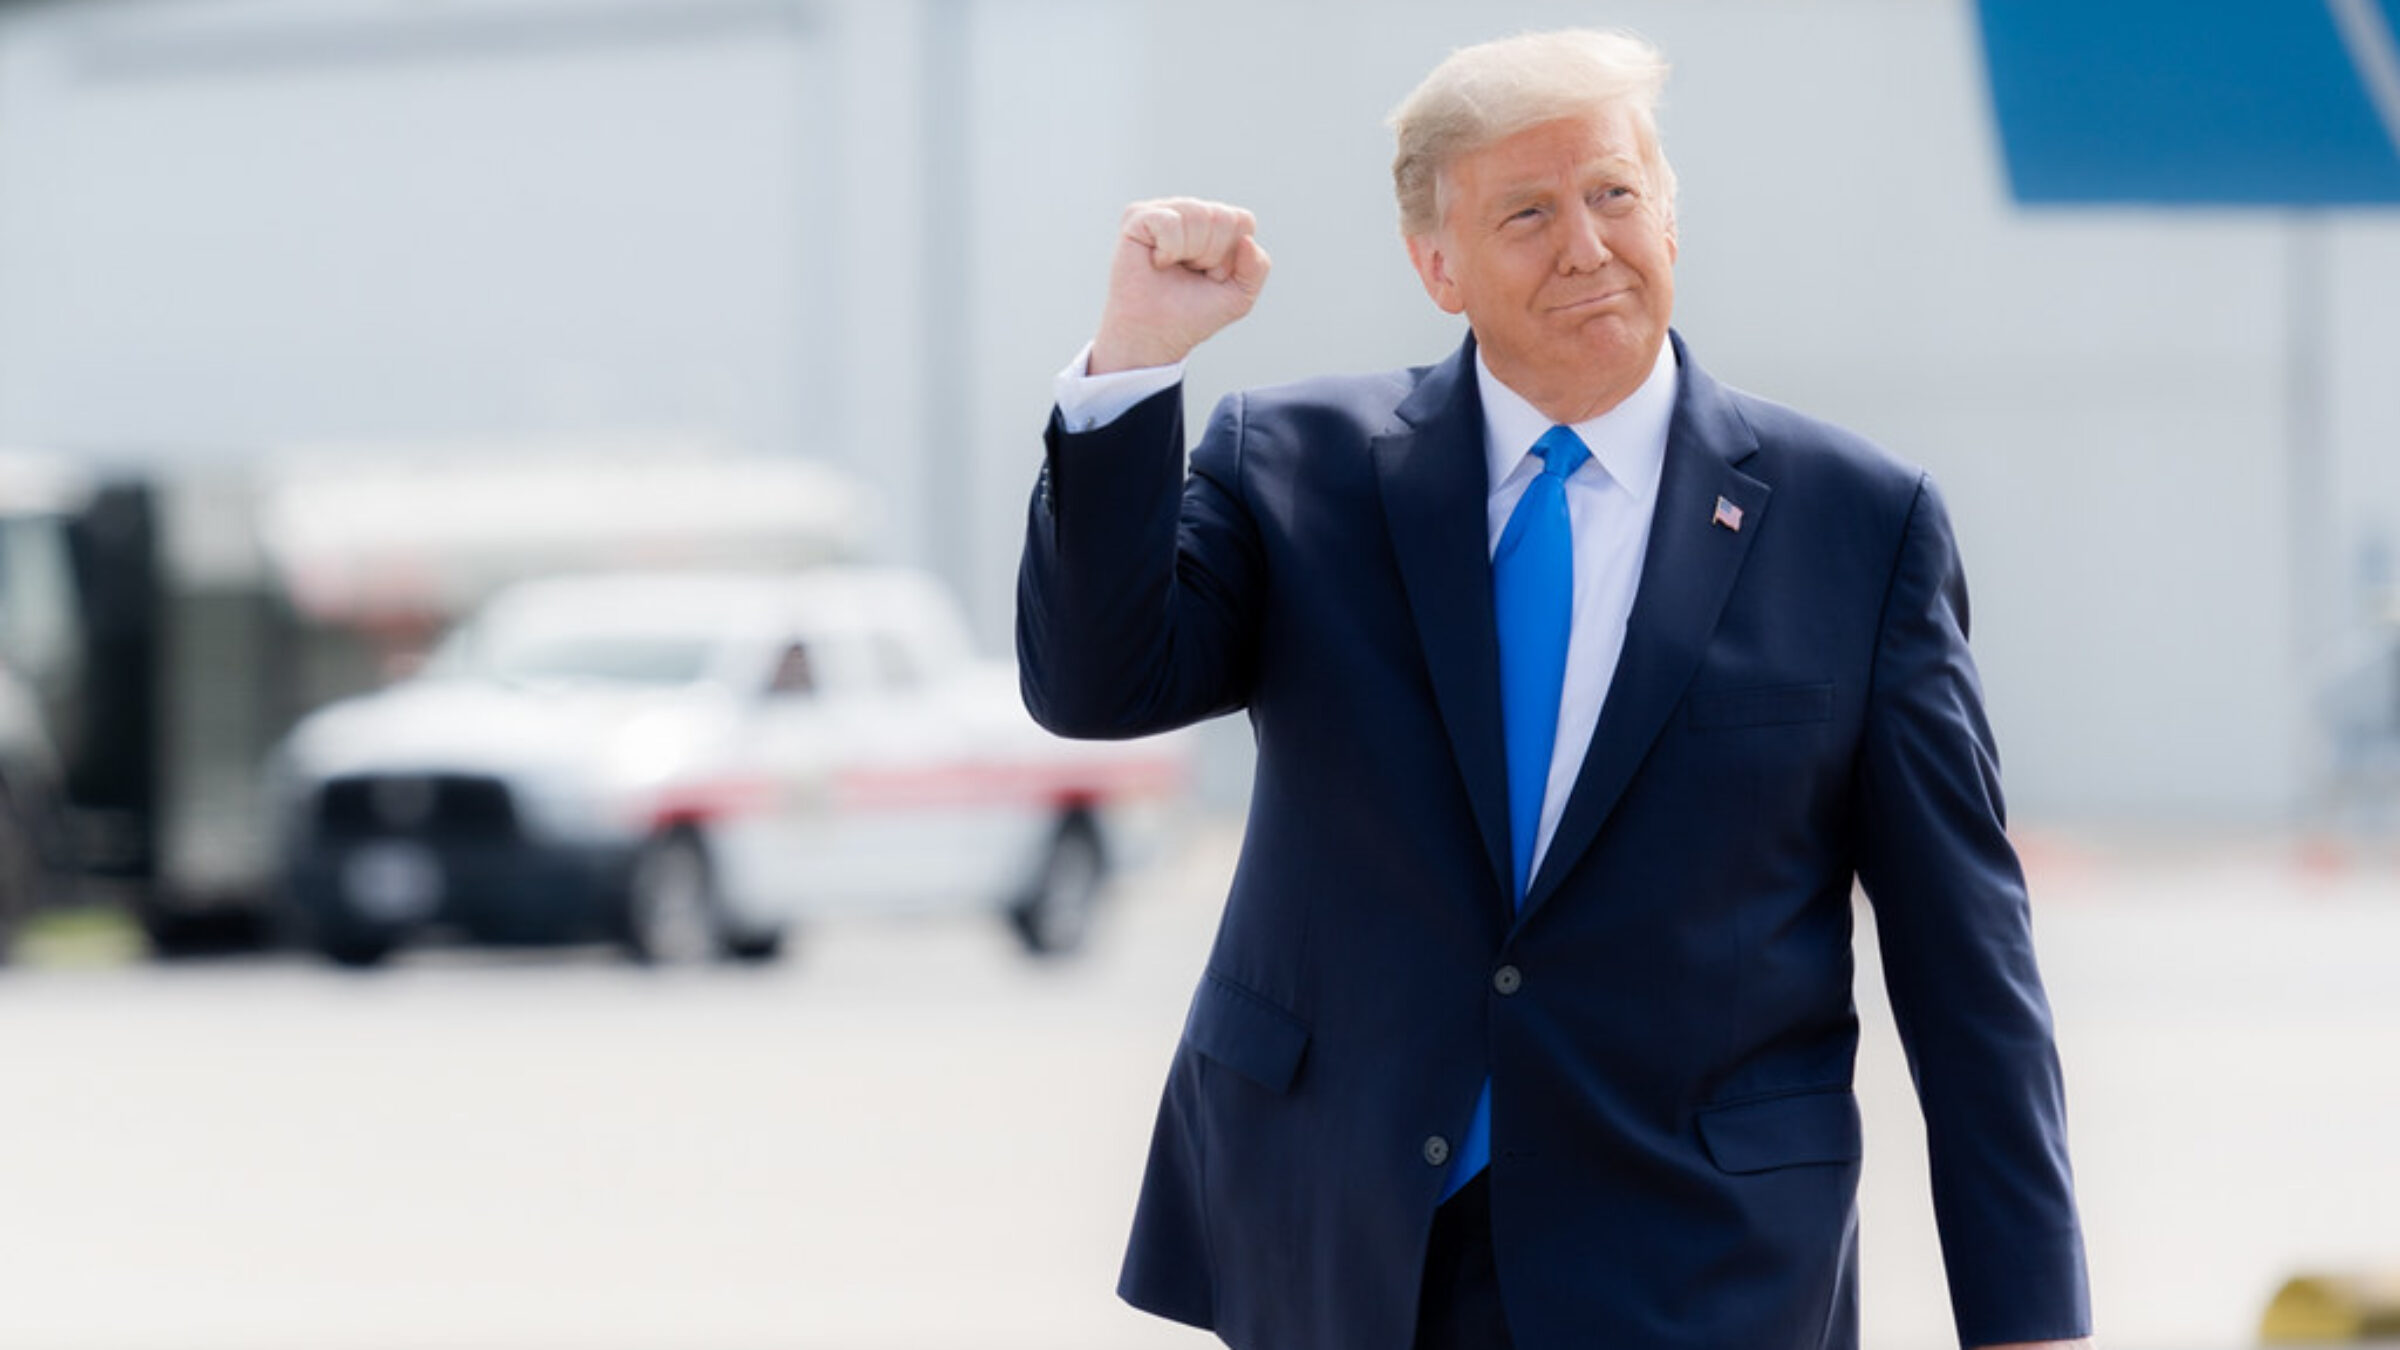 President Trump pumps his fist while walking across a tarmac